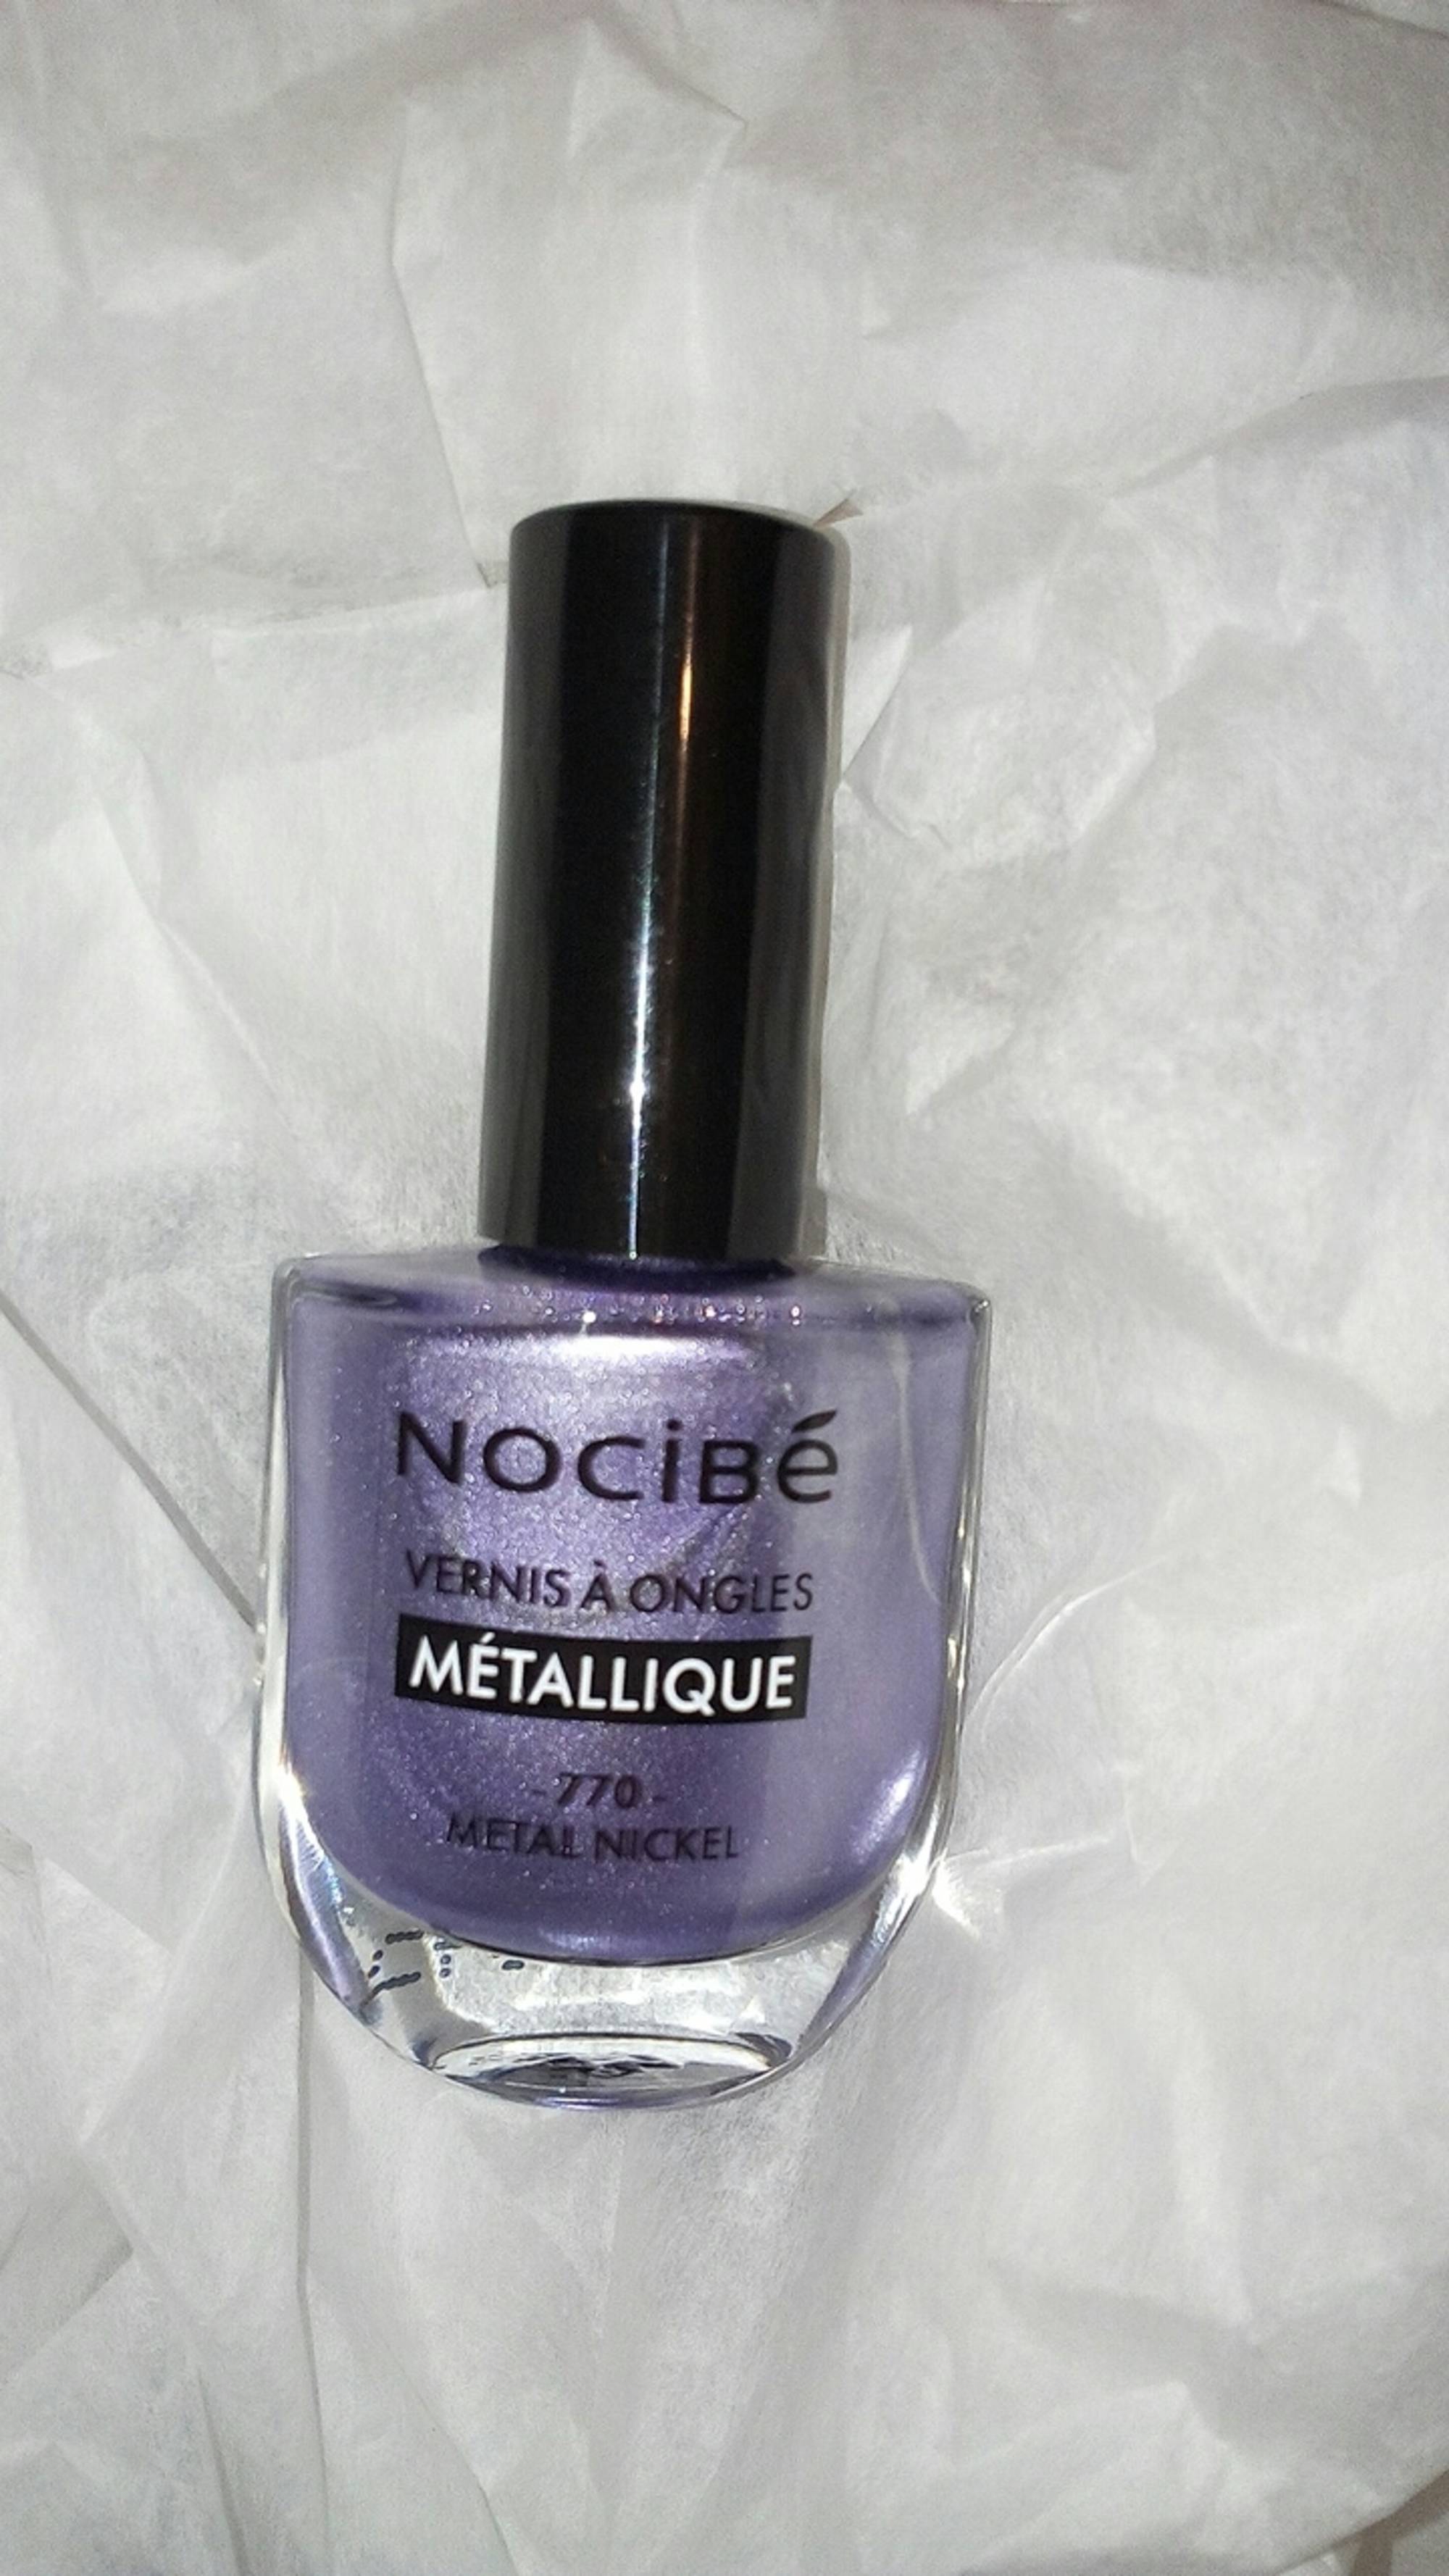 NOCIBÉ - Métallique - Vernis à ongles 770 metal nickel